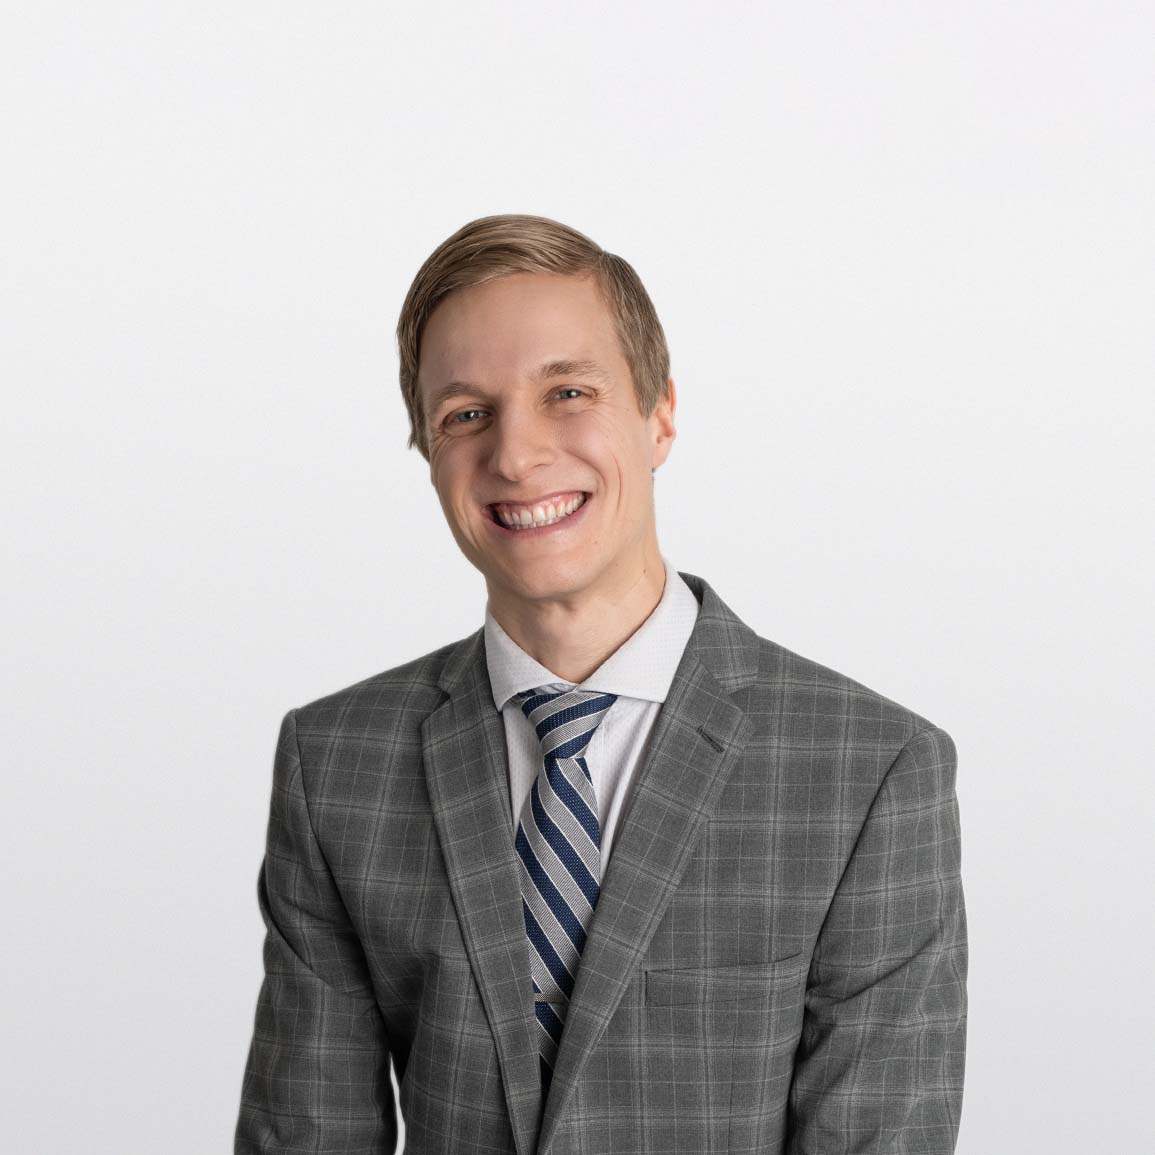 Image of Nick Bruce financial advisor on white background.